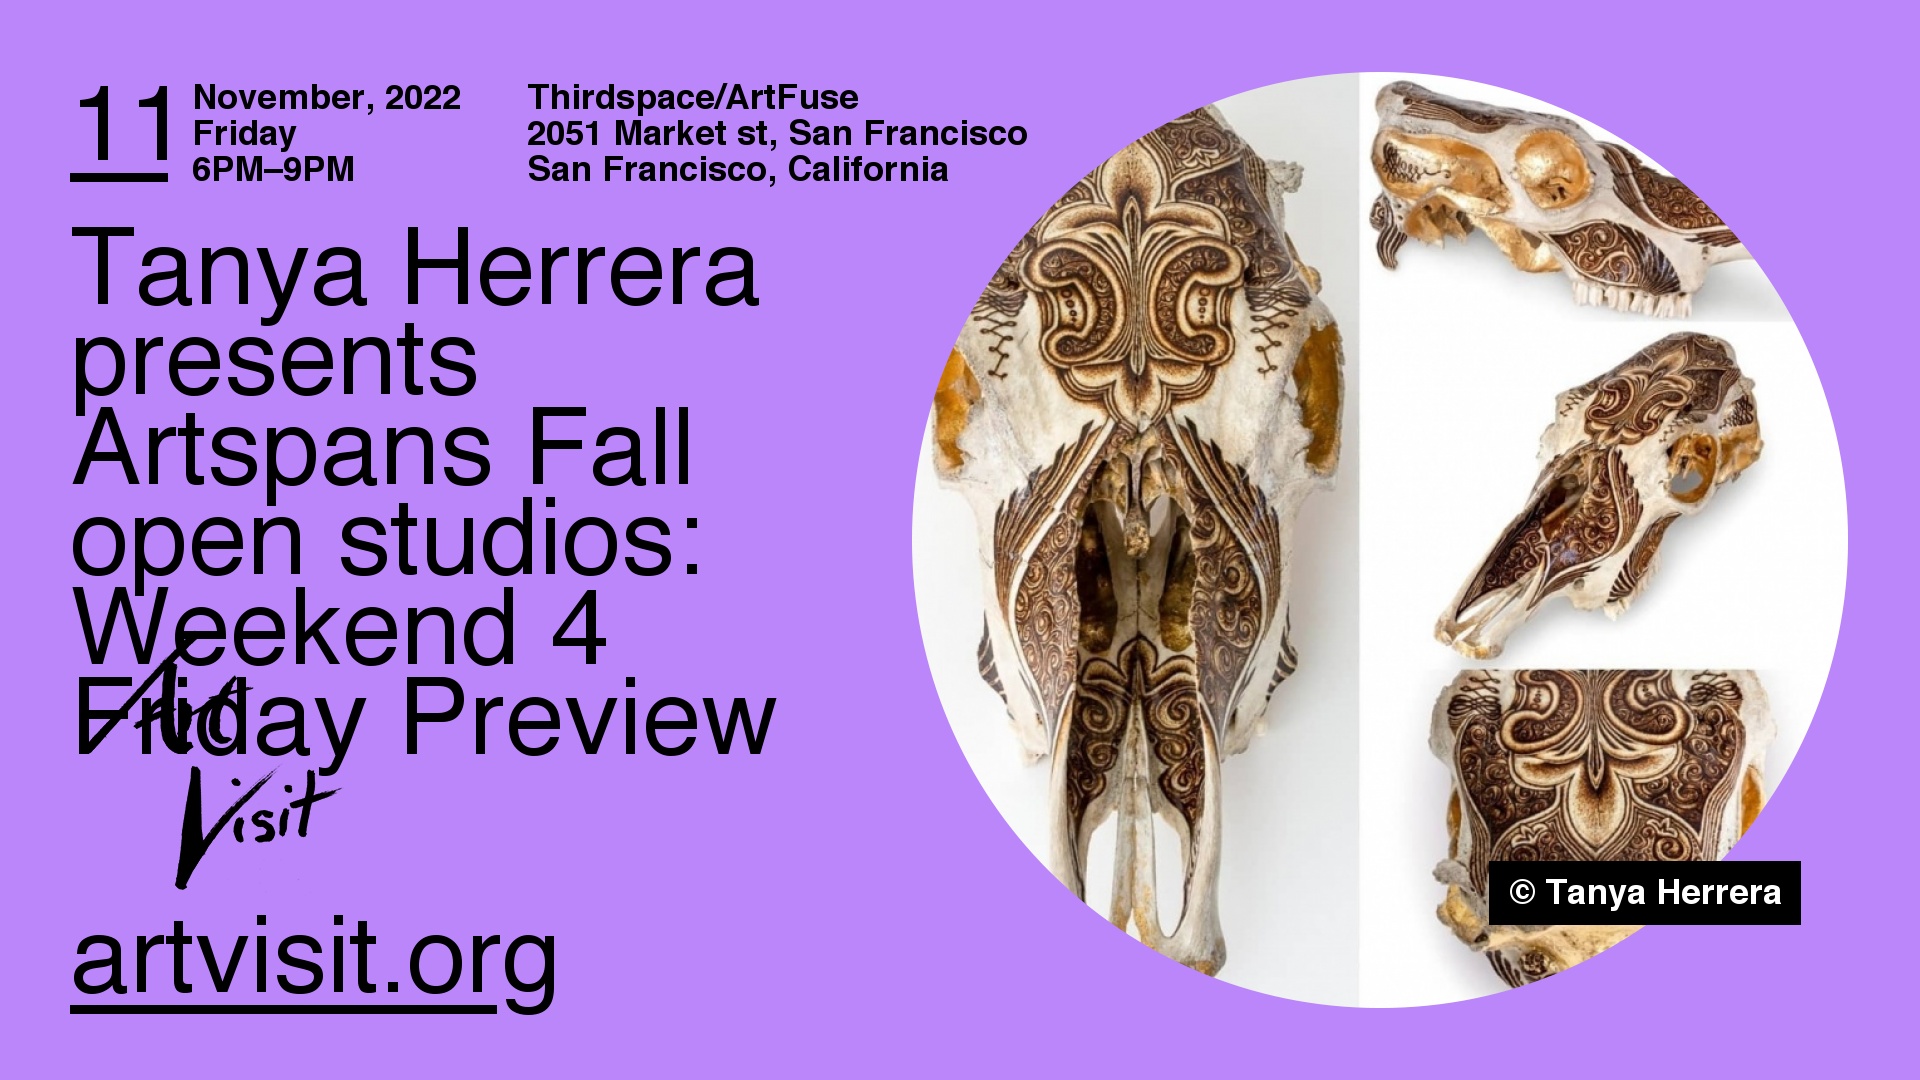 Tanya Herrera presents Artspans Fall open studios: Weekend 4 Friday Preview 